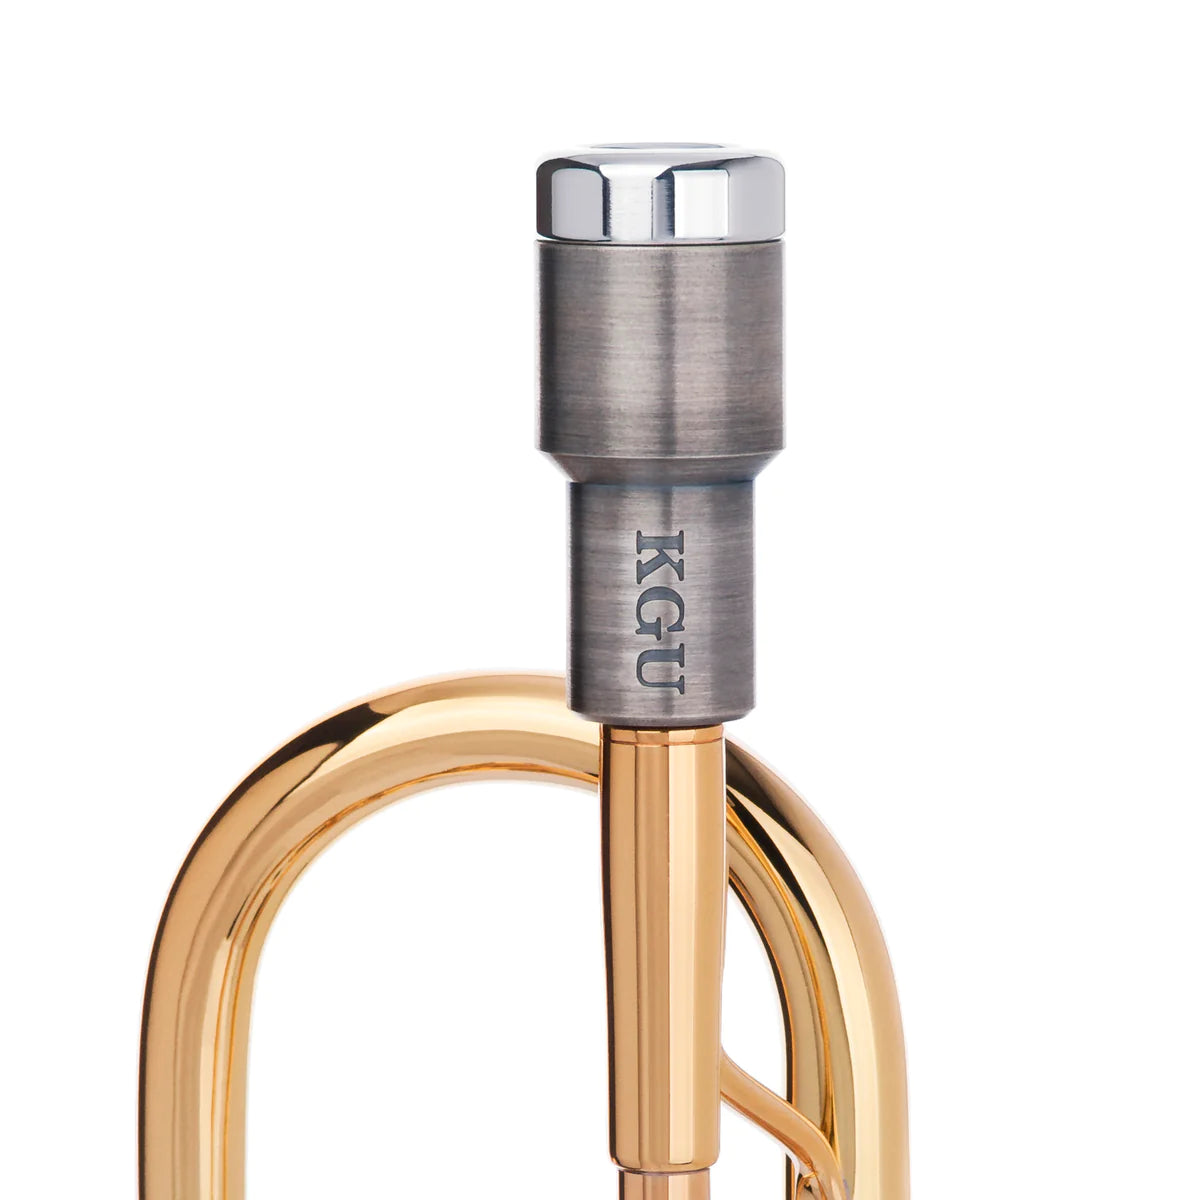 KGU Music - Rocket Trumpet mouthpiece booster